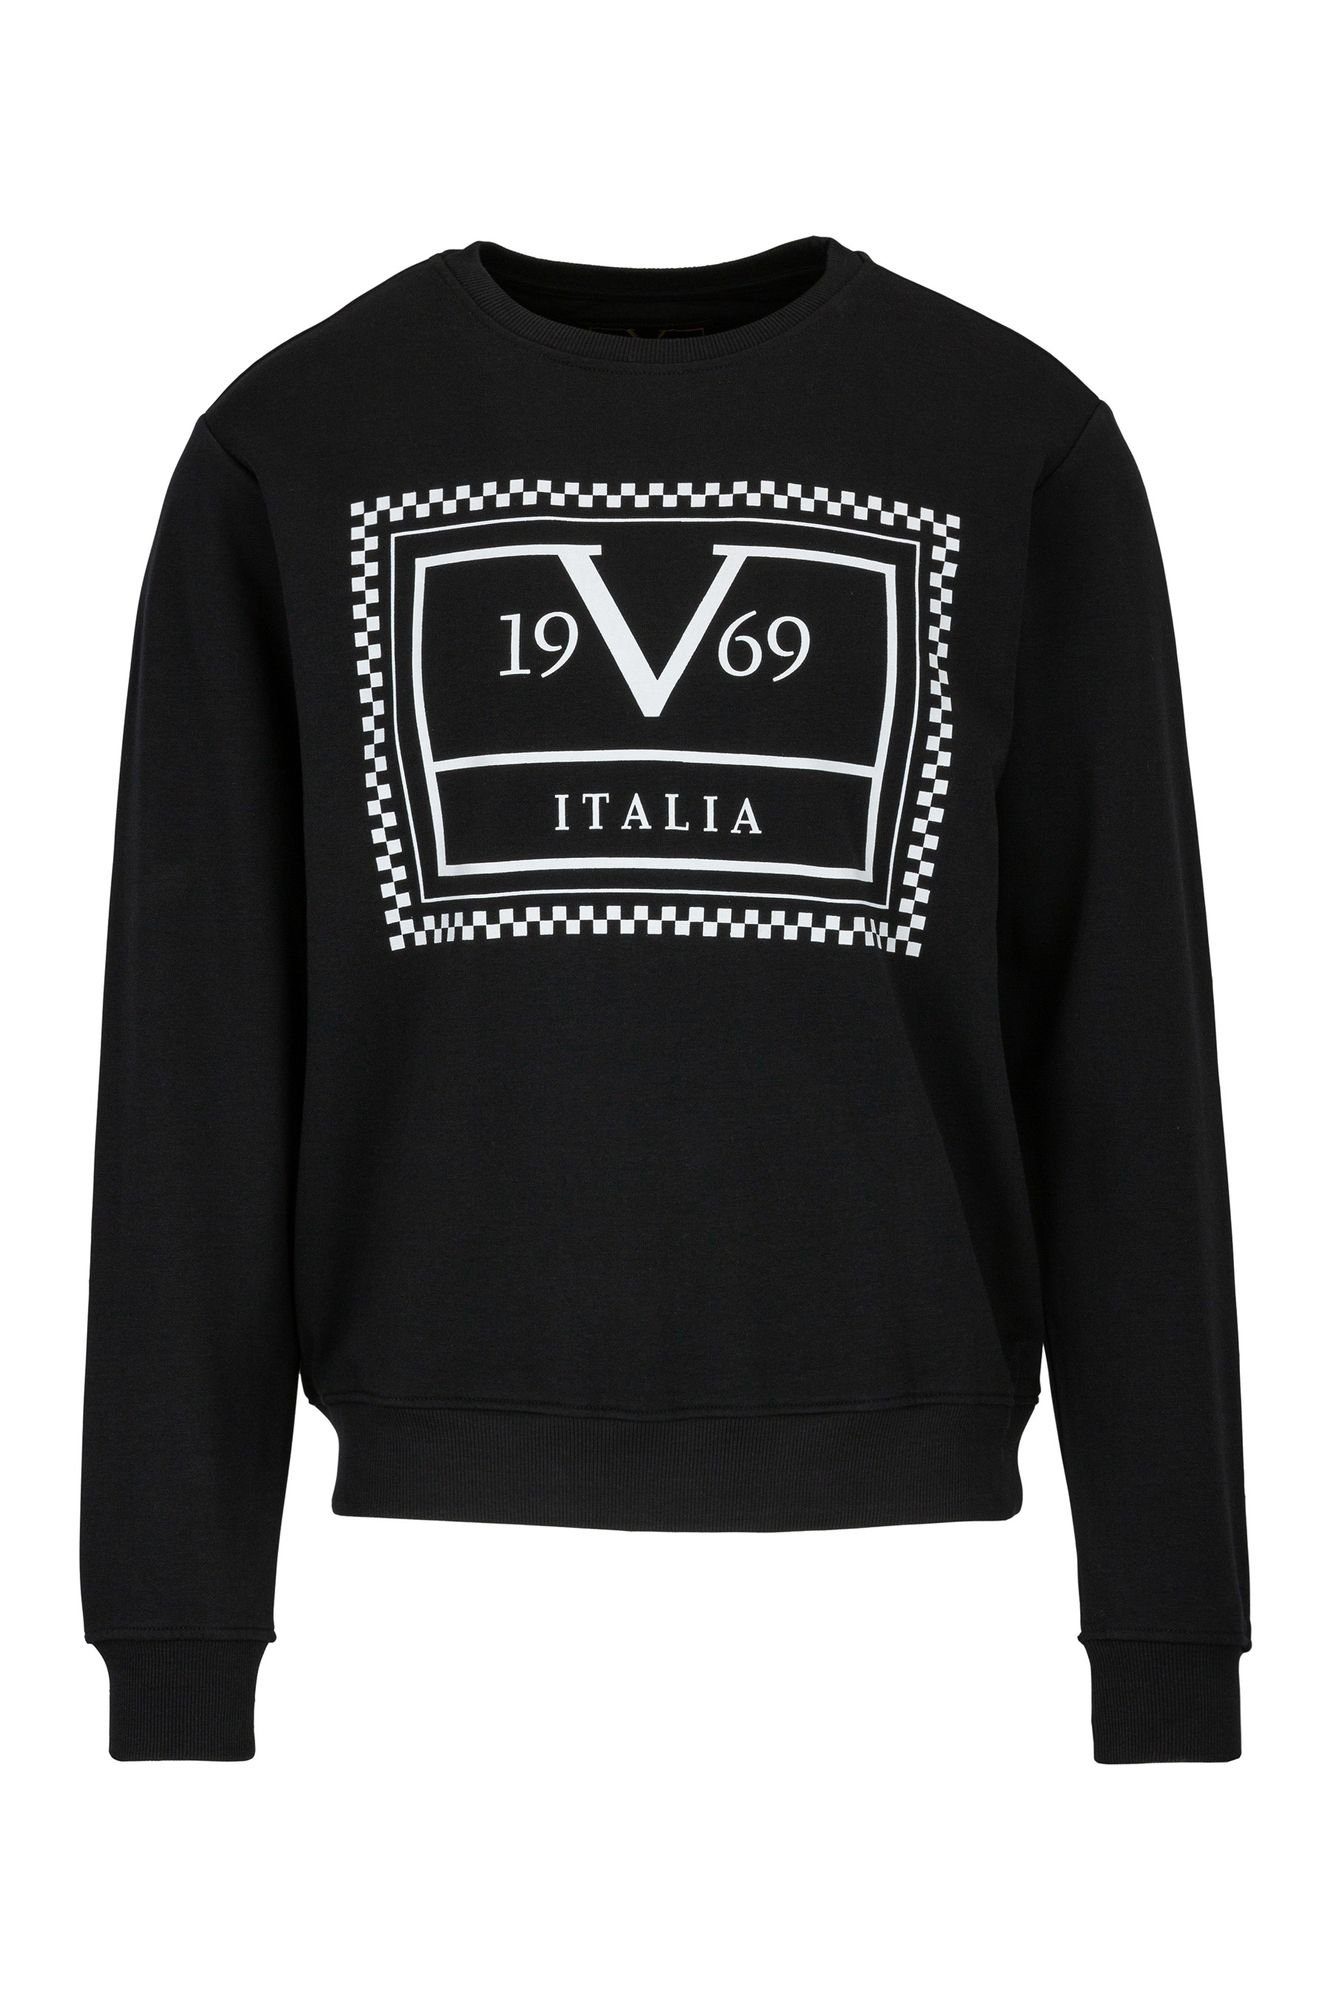 19V69 Italia by Versace Sweatshirt Lorenzo